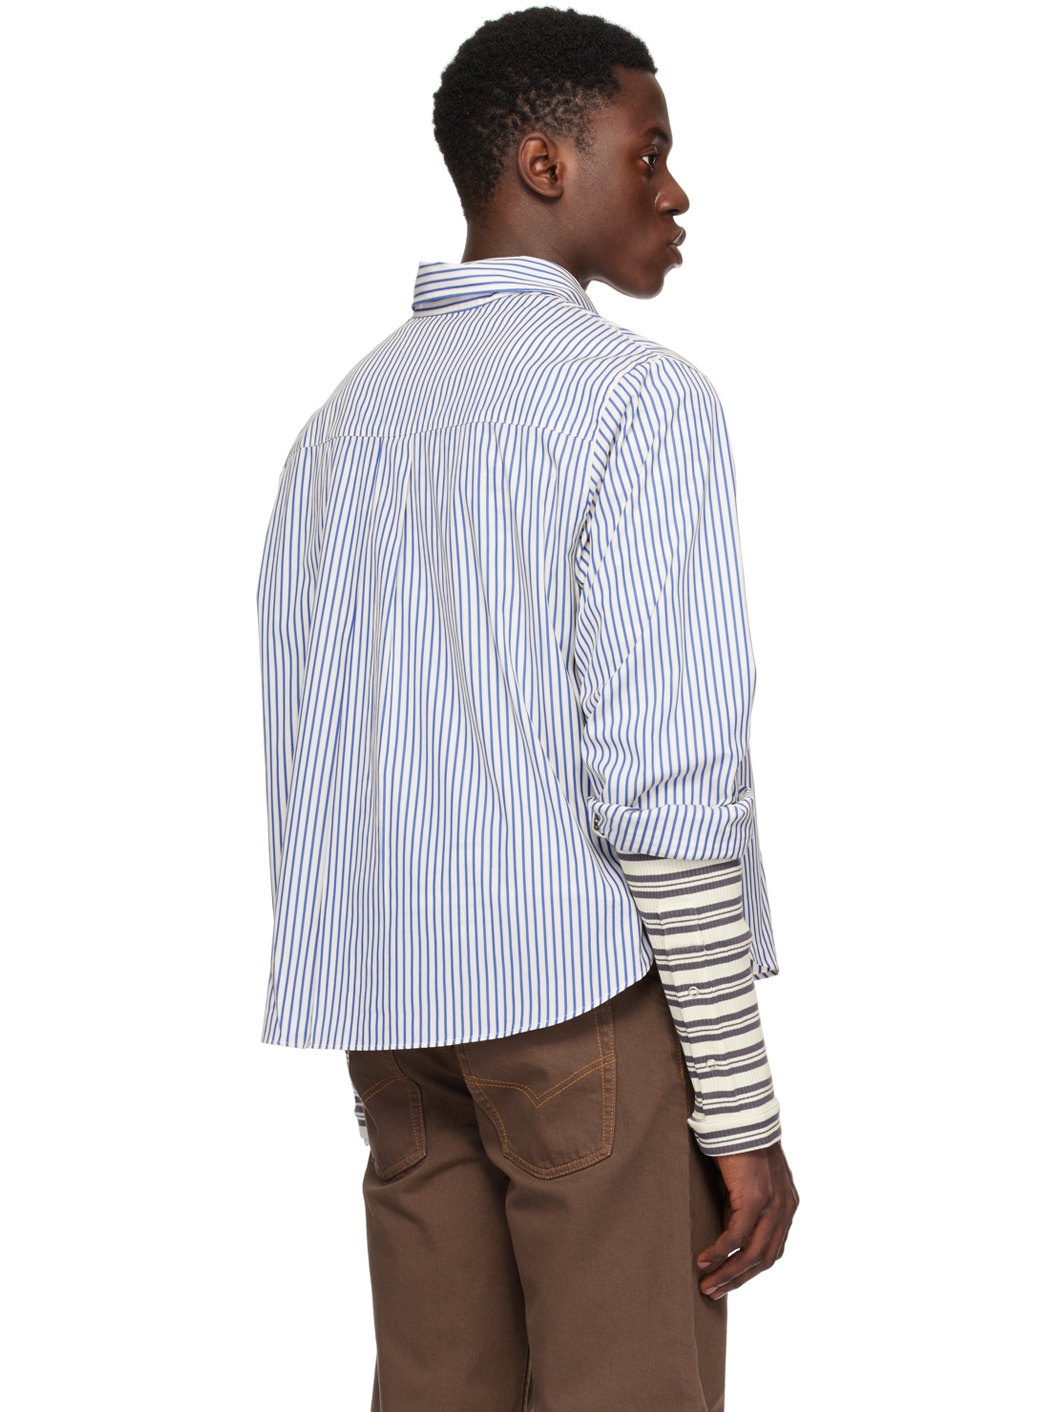 White & Blue Smiley Stripe Shirt - 3